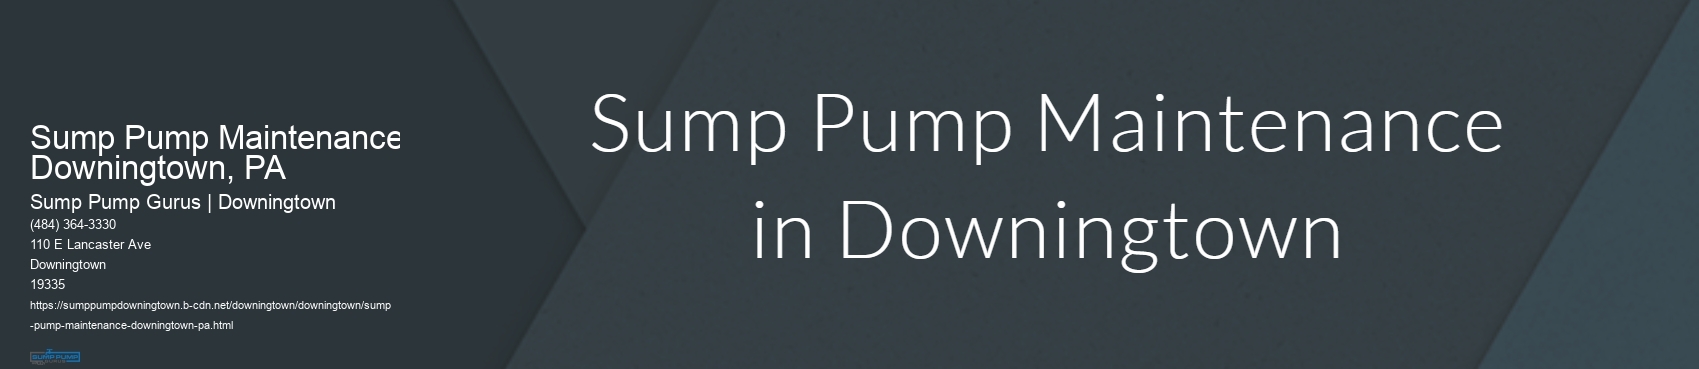 Sump Pump Maintenance Downingtown, PA